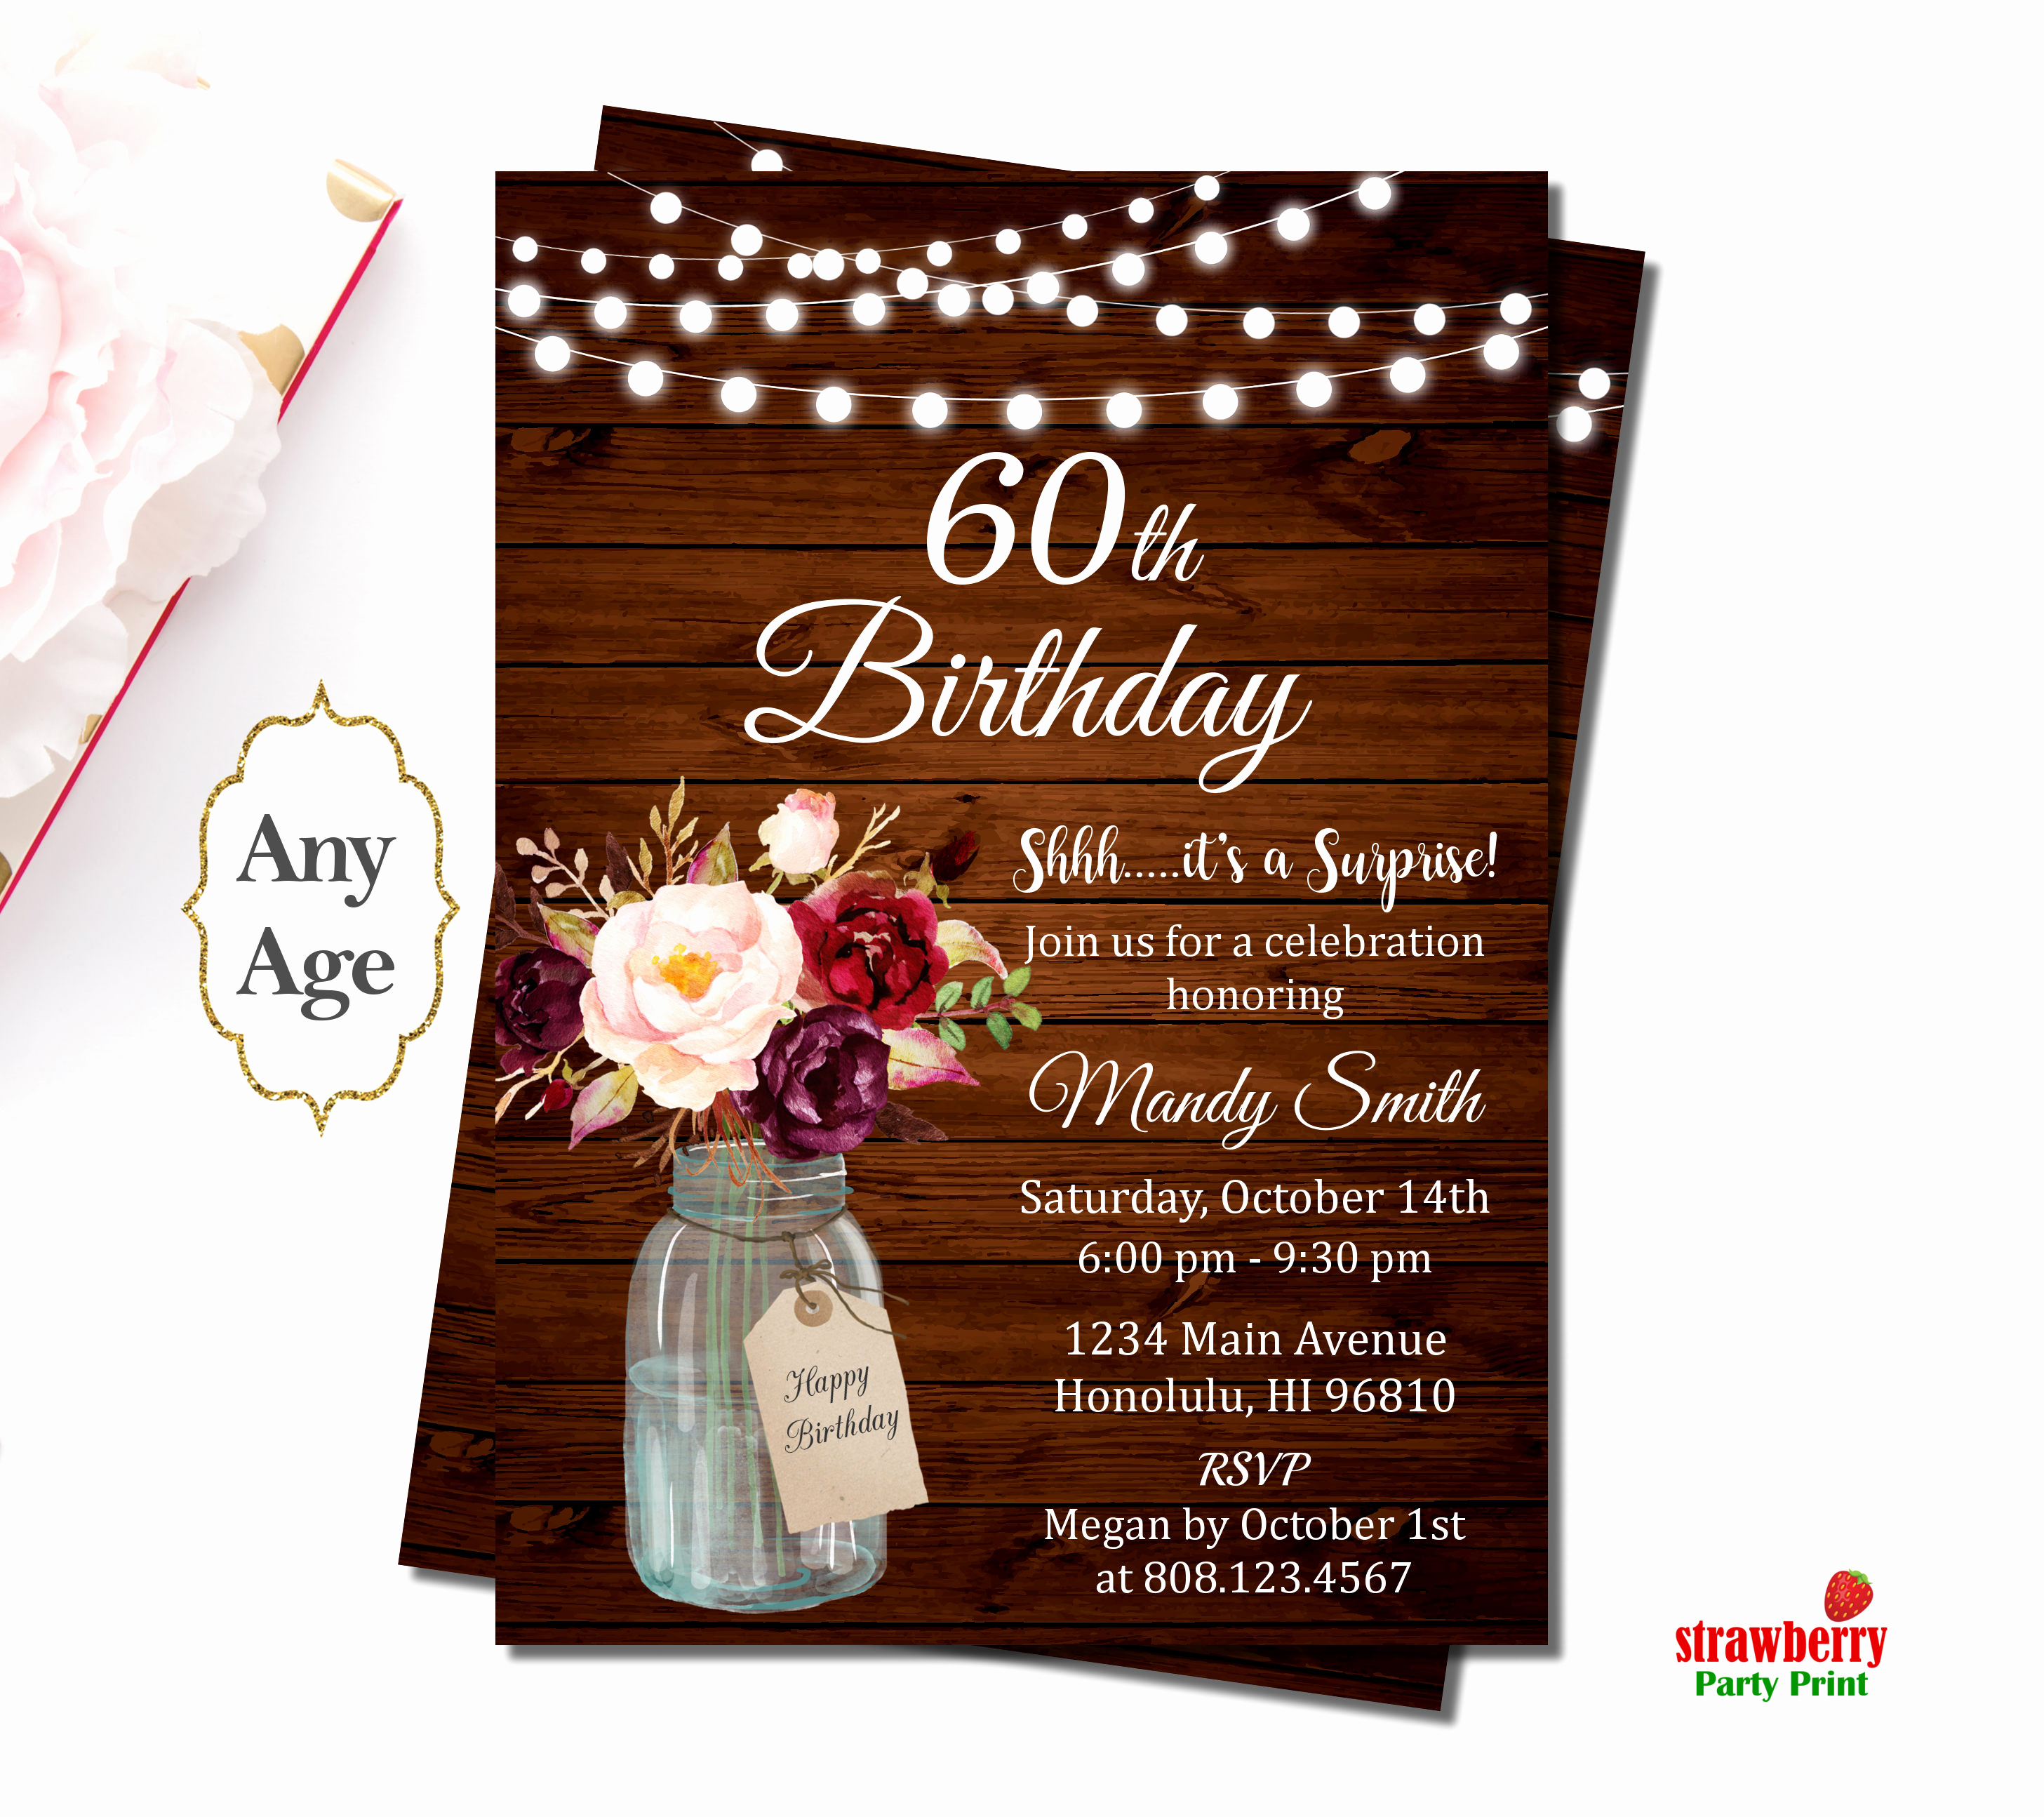 60 Th Birthday Invitation Inspirational 60th Birthday Invitations for Women Surprise 60th Birthday